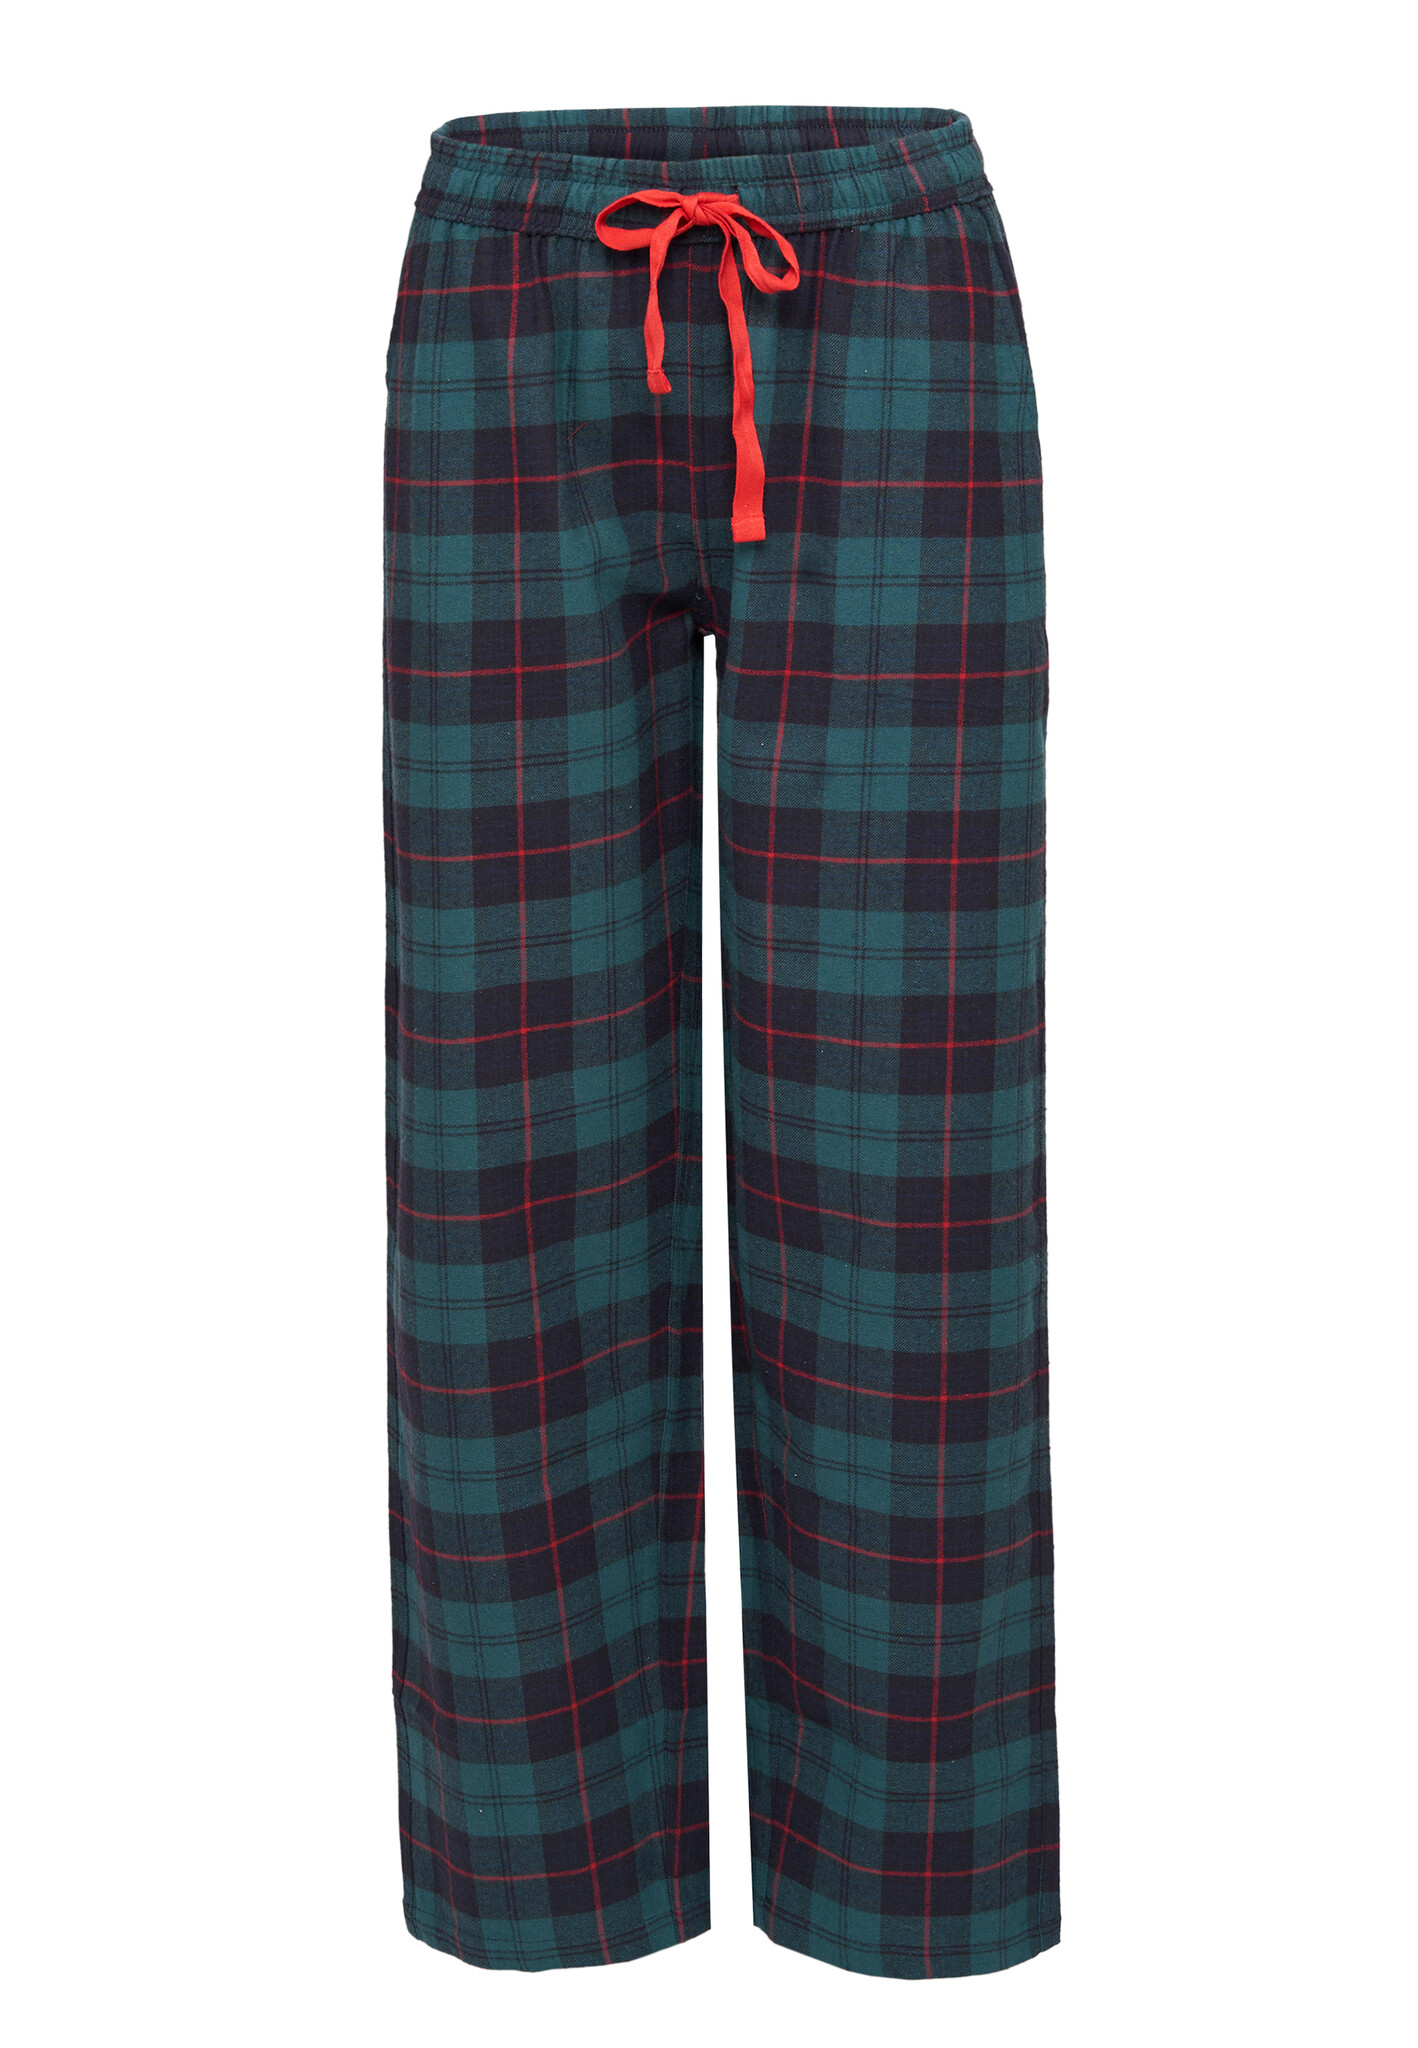 HAPPY SHORTS Men's Flannel Pyjama Pants Checkered Homewear Christmas |  Happyshorts